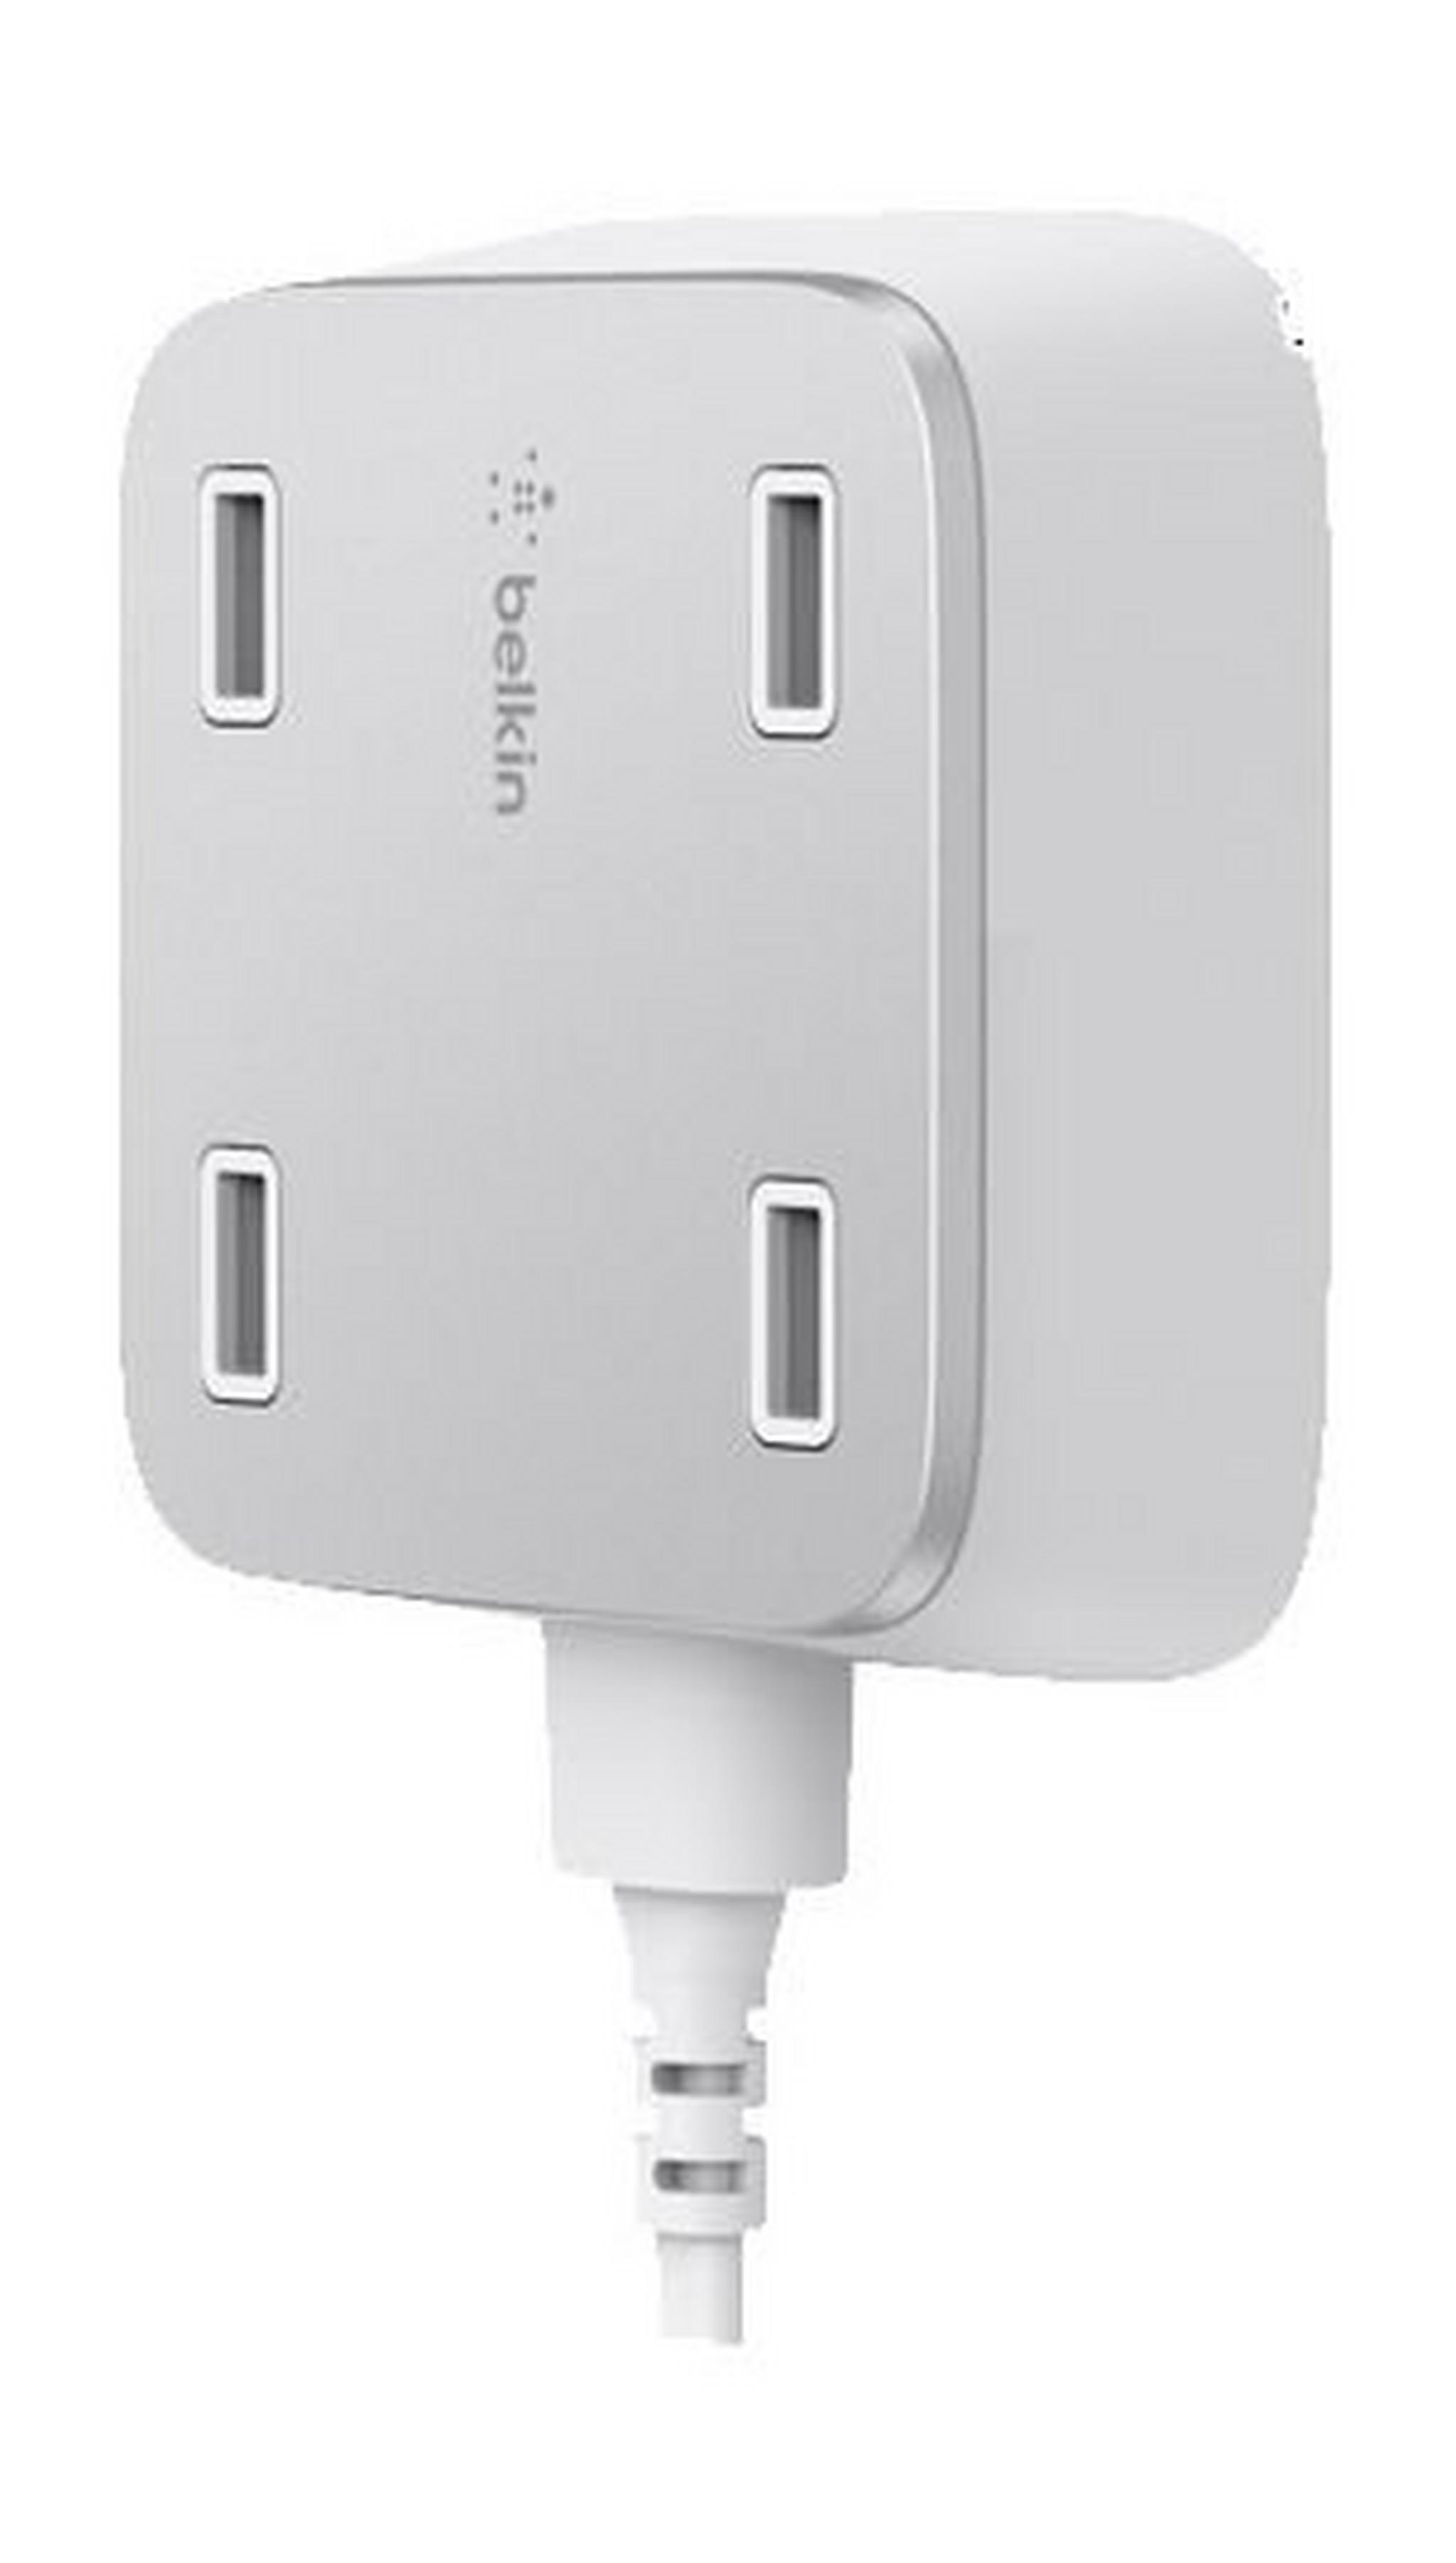 Belkin Family RockStar 4-Port USB Charger (F8M990dr) - White